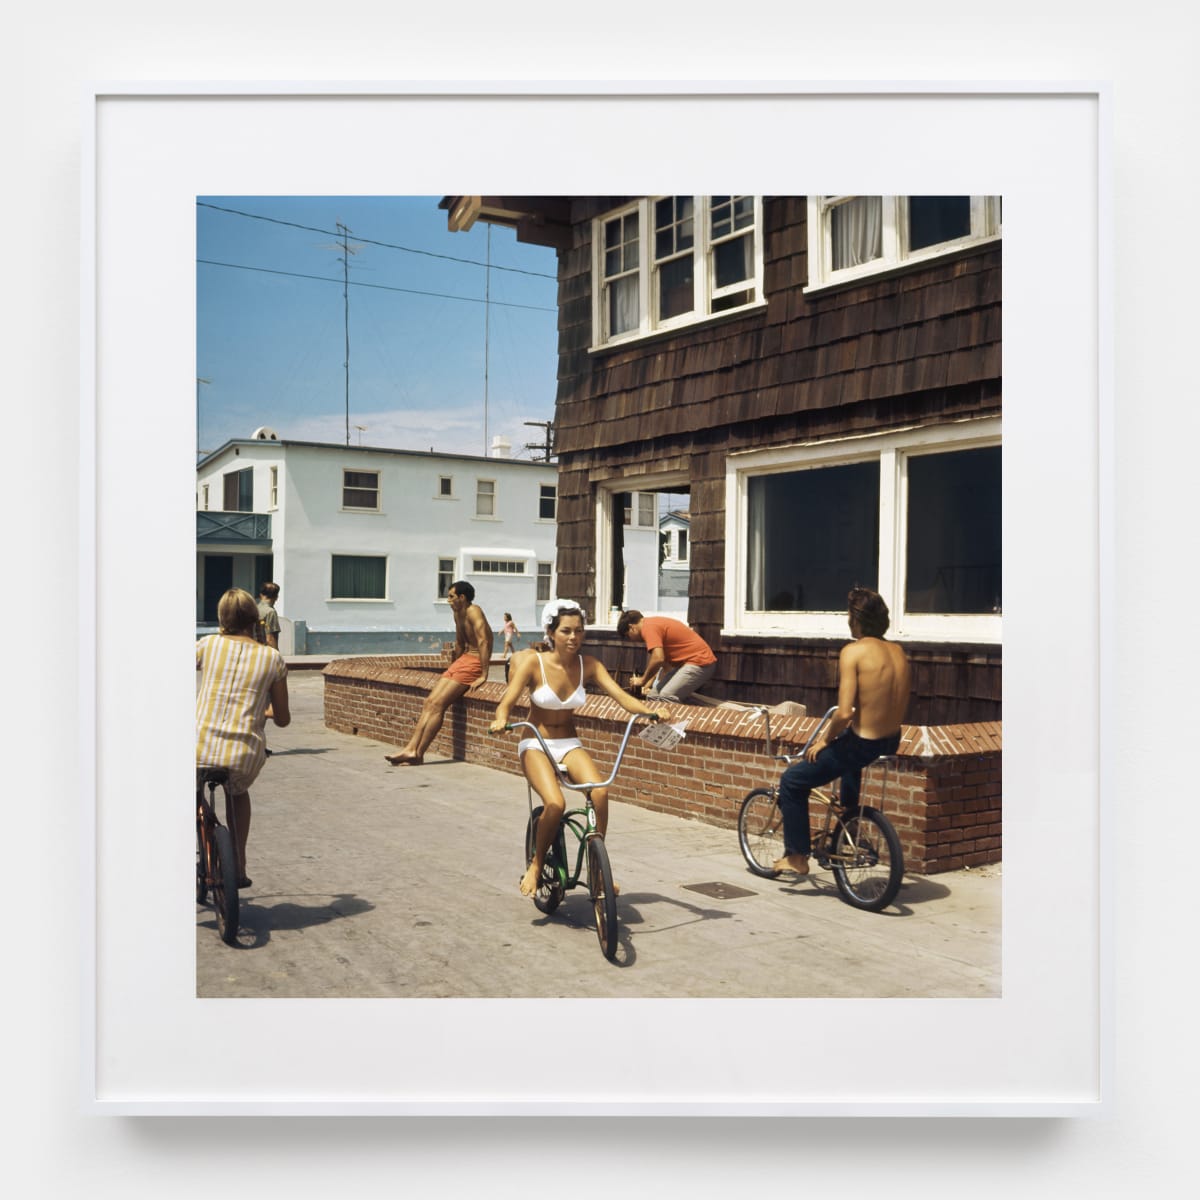 Framed Poster - Sidewalk Surfer, Huntington Beach, 1976 by Hugh Holland